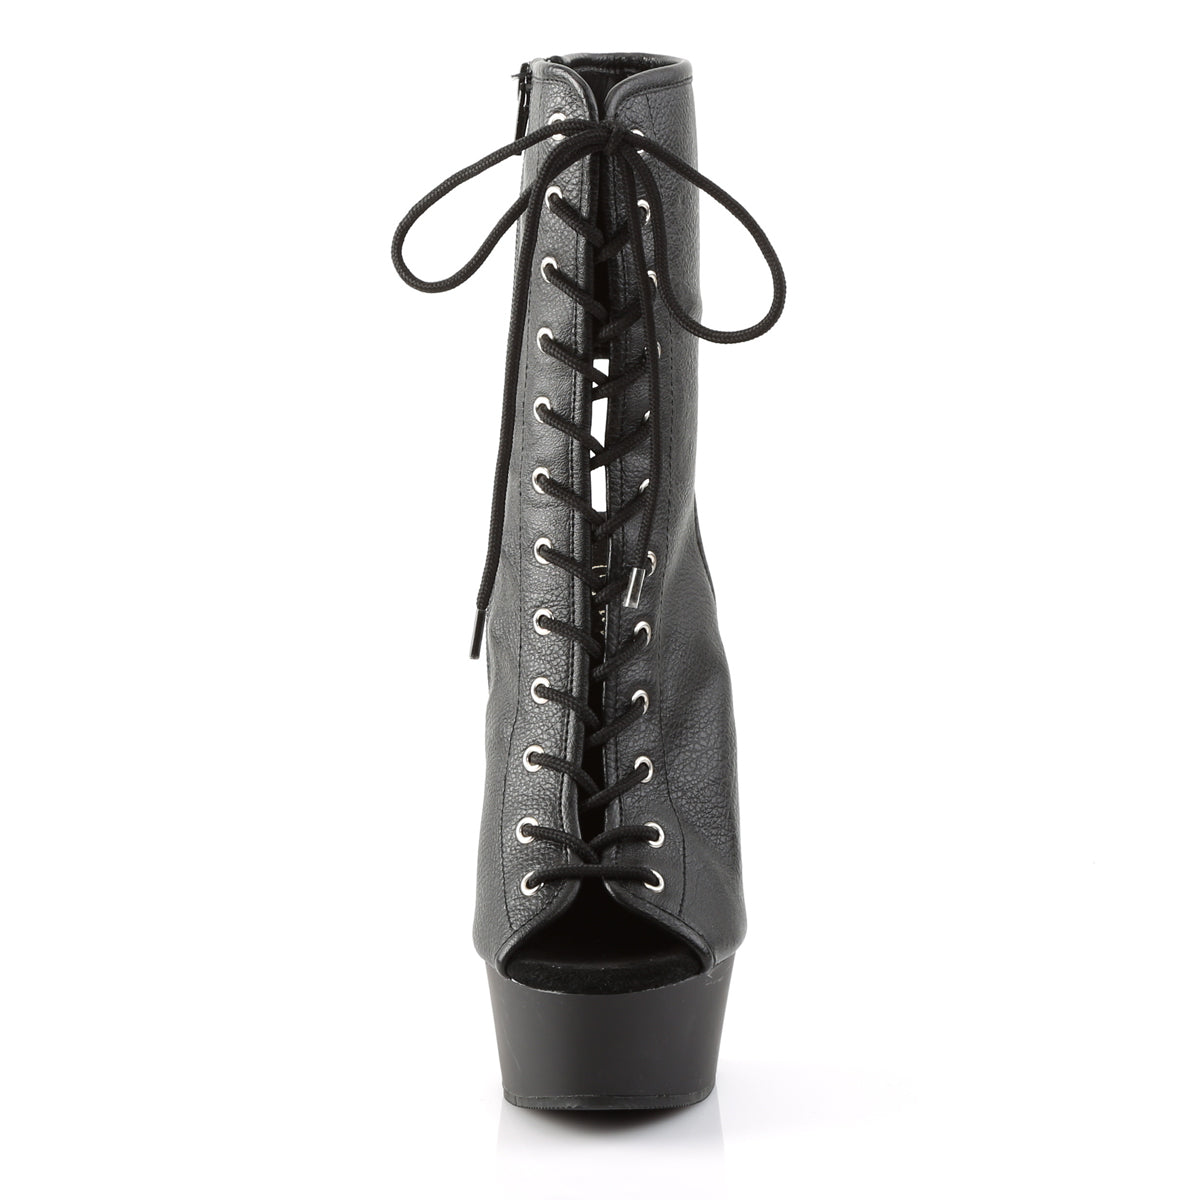 DELIGHT-1016 Pleaser 6 Inch Heel Black Pole Dancer Platforms-Pleaser- Sexy Shoes Alternative Footwear